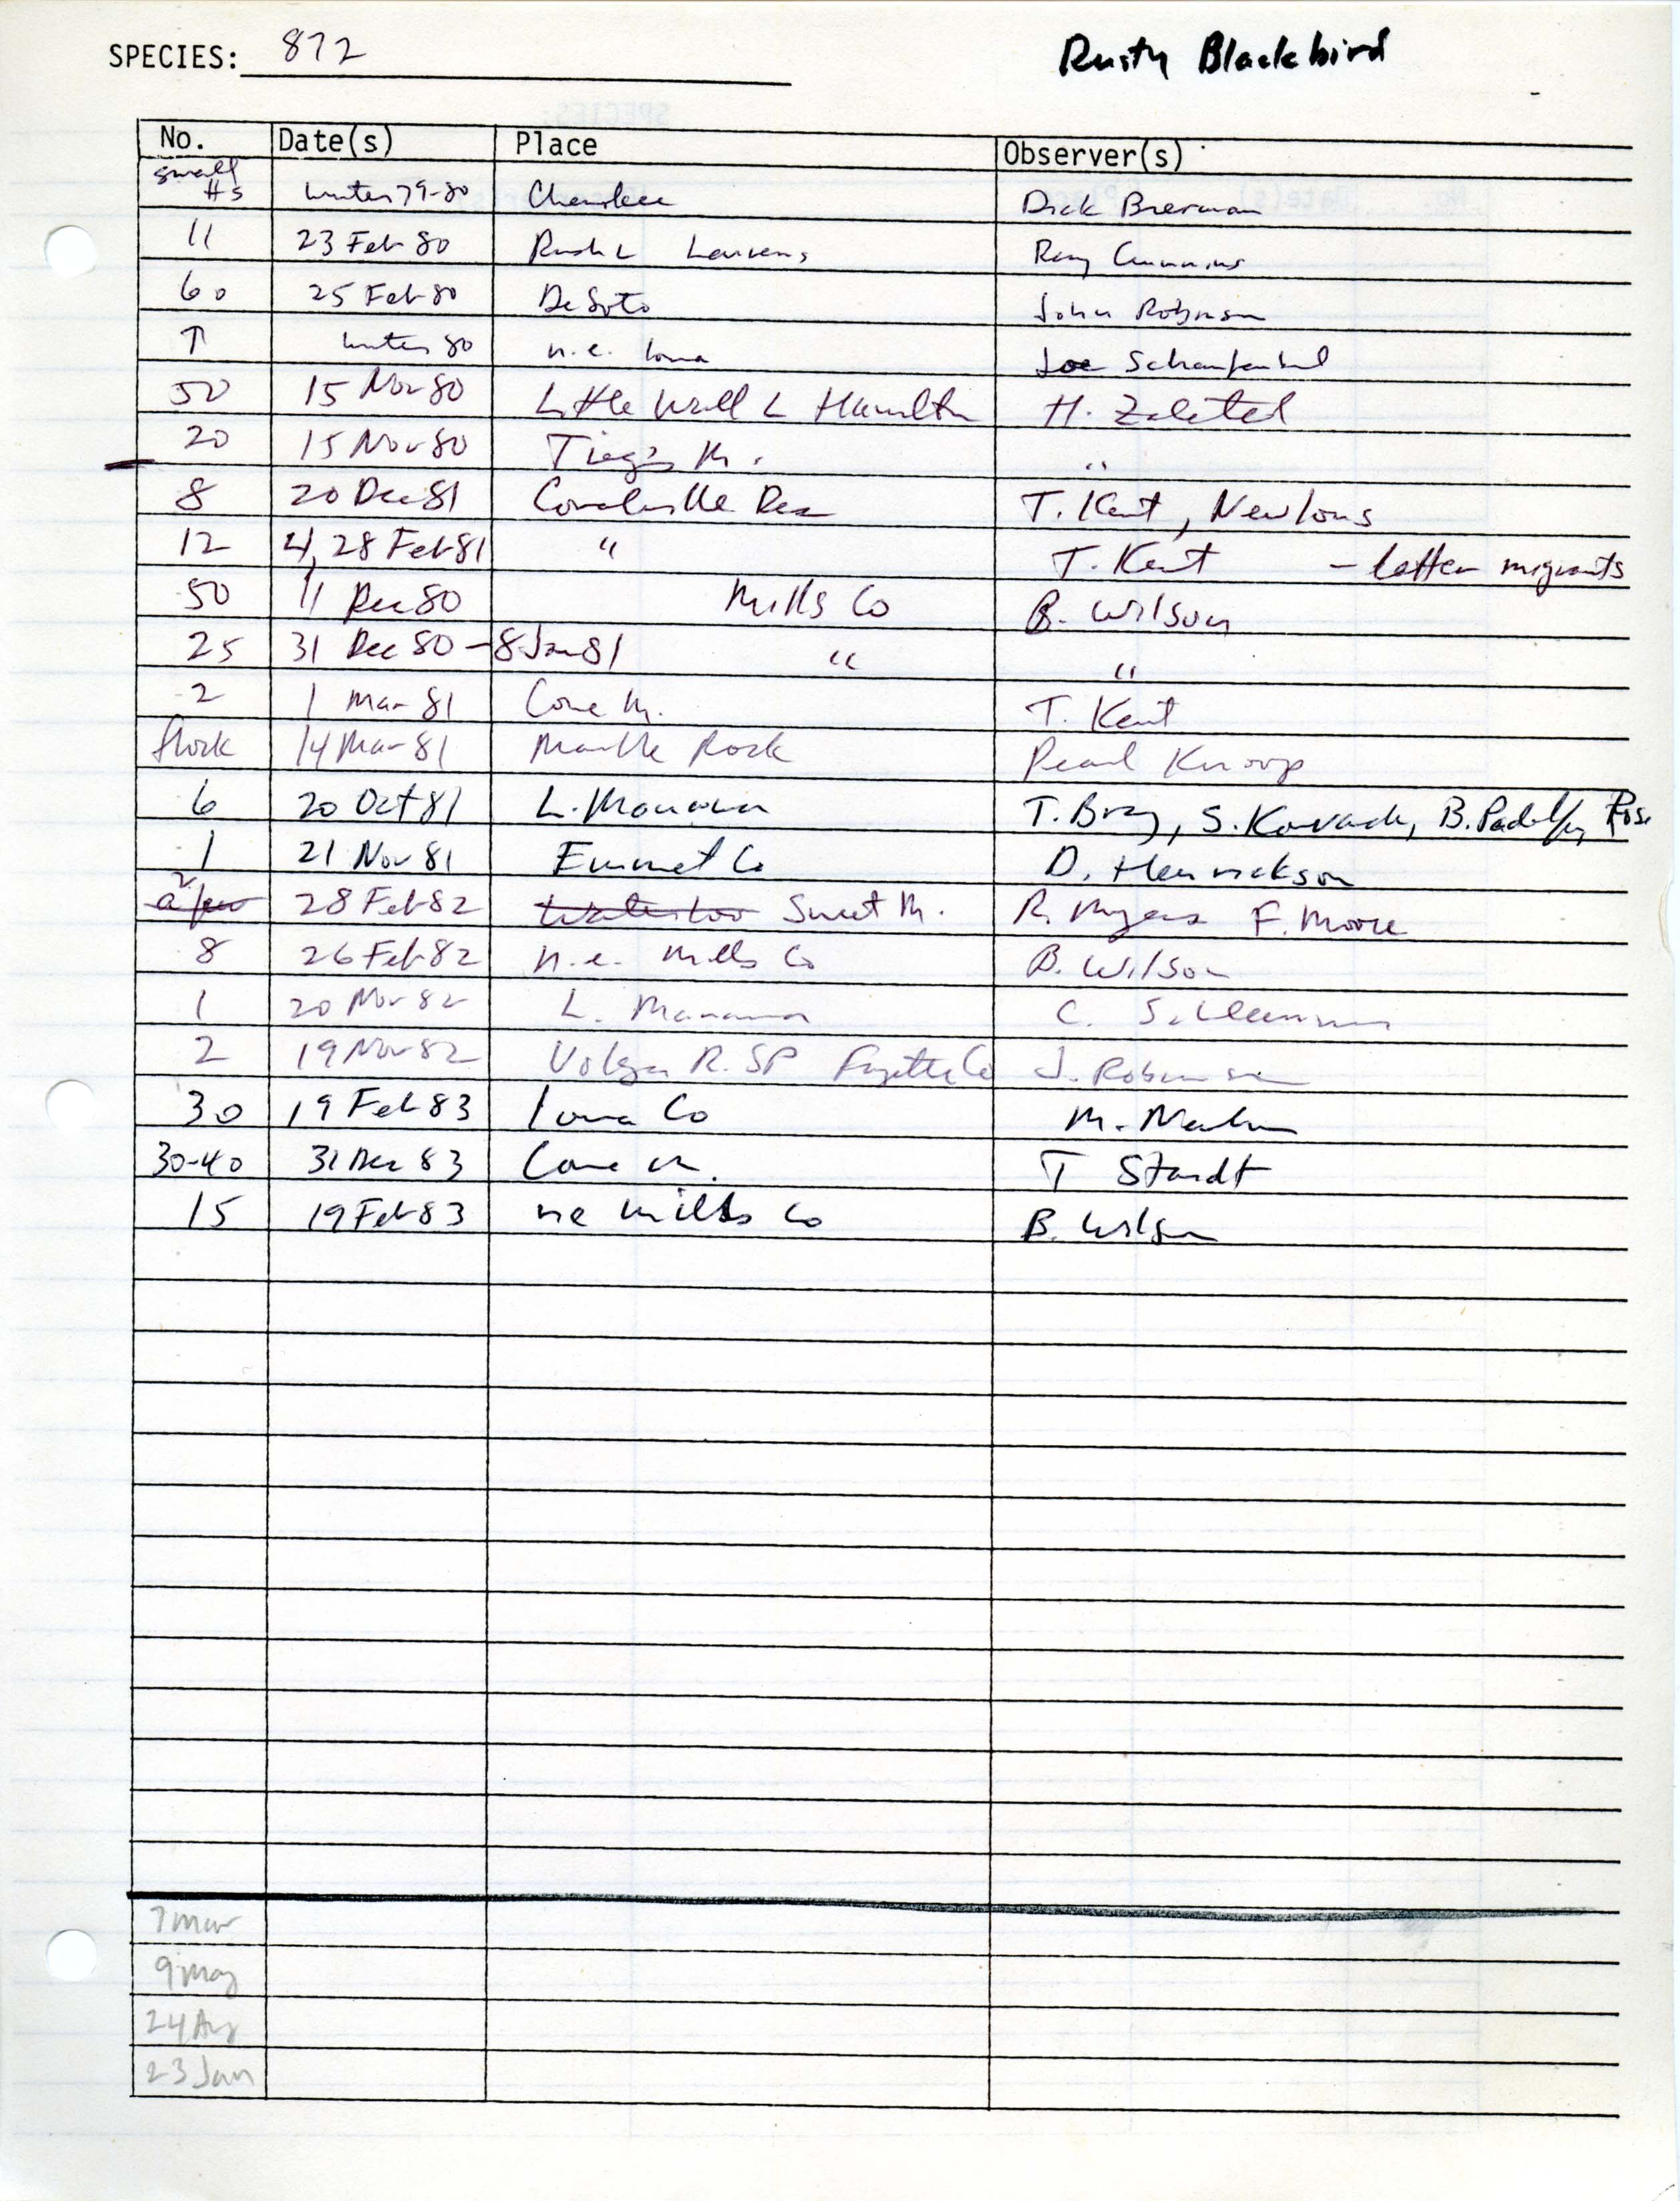 Iowa Ornithologists' Union, field report compiled data, Rusty Blackbird, 1979-1983